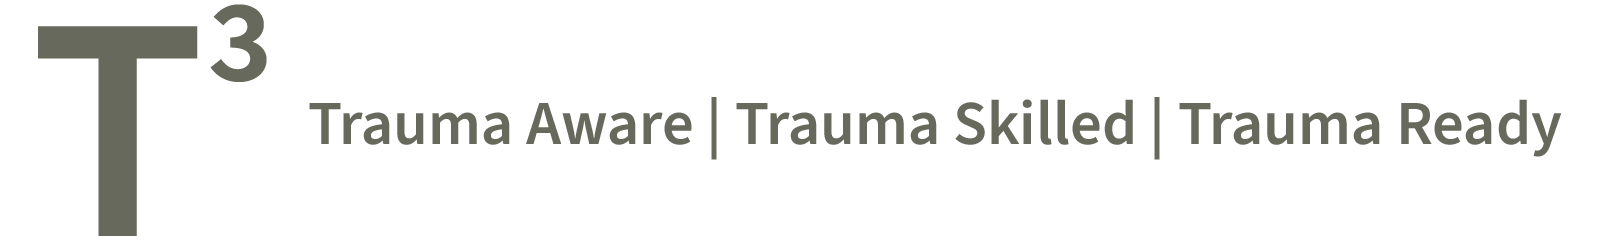 T3 Trauma Aware | Trauma Skilled | Trauma Ready